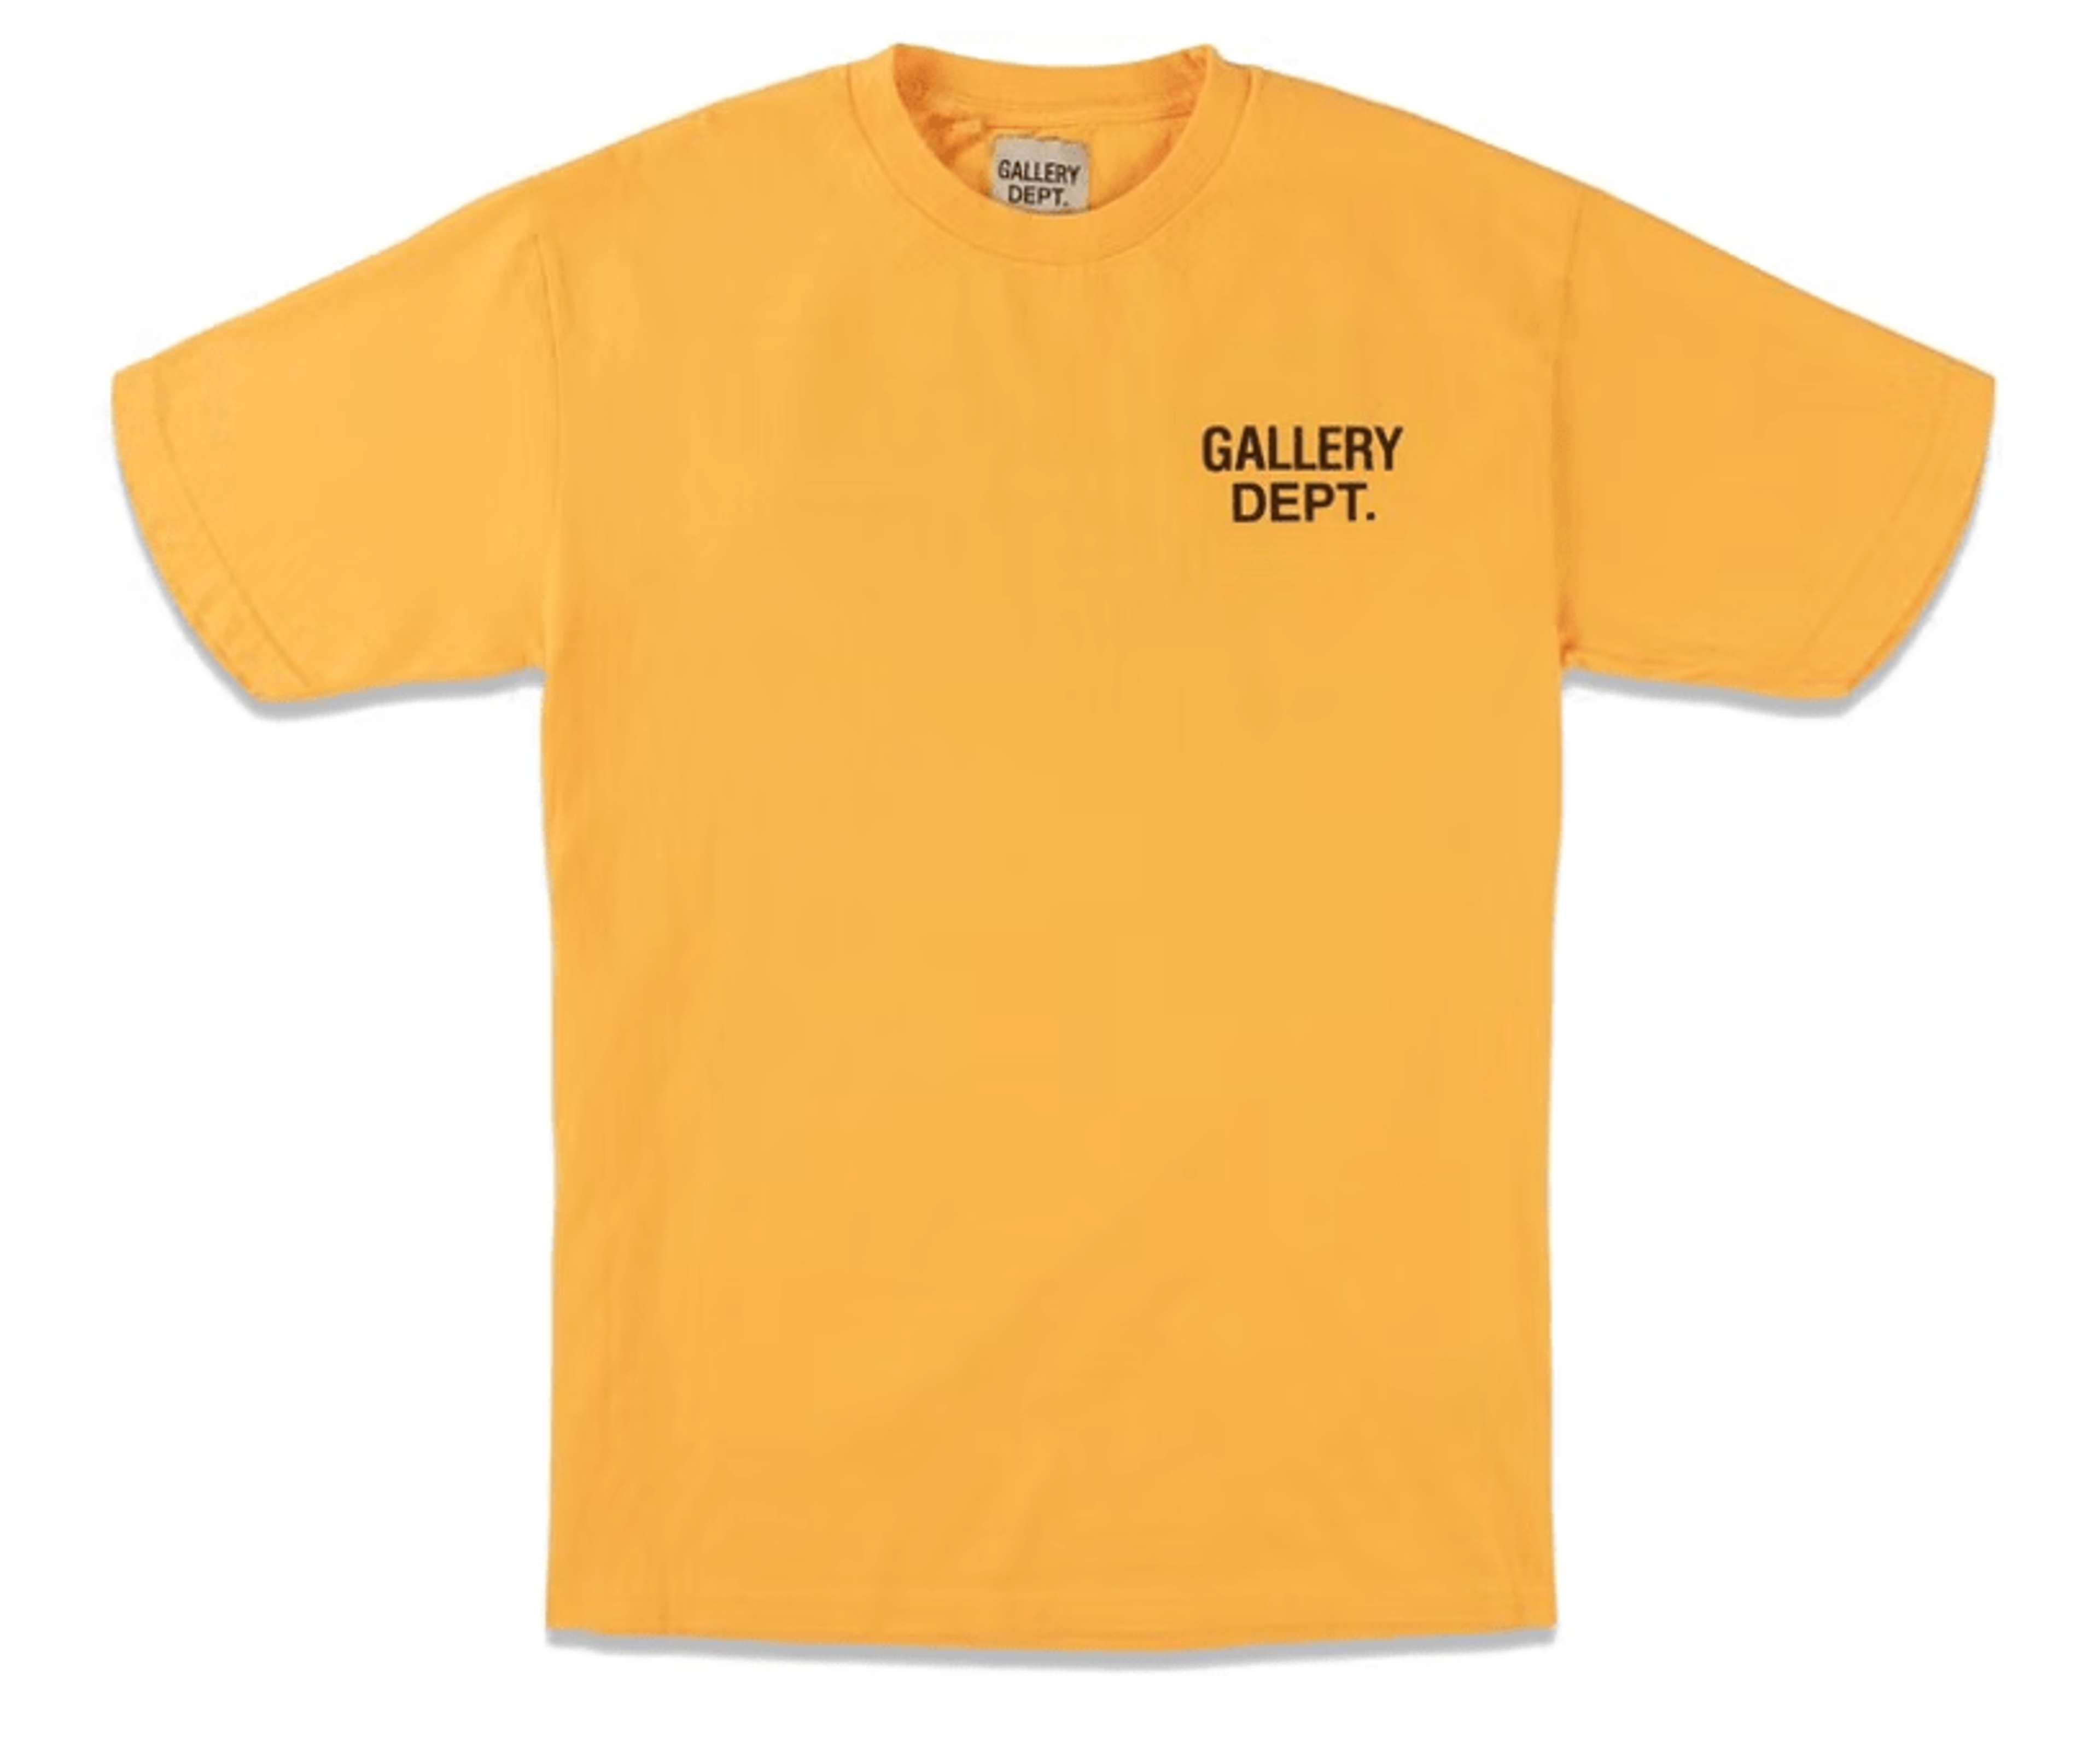 Alternate View 3 of Gallery Department Souvenir Short Sleeve Tee Shirt Yellow